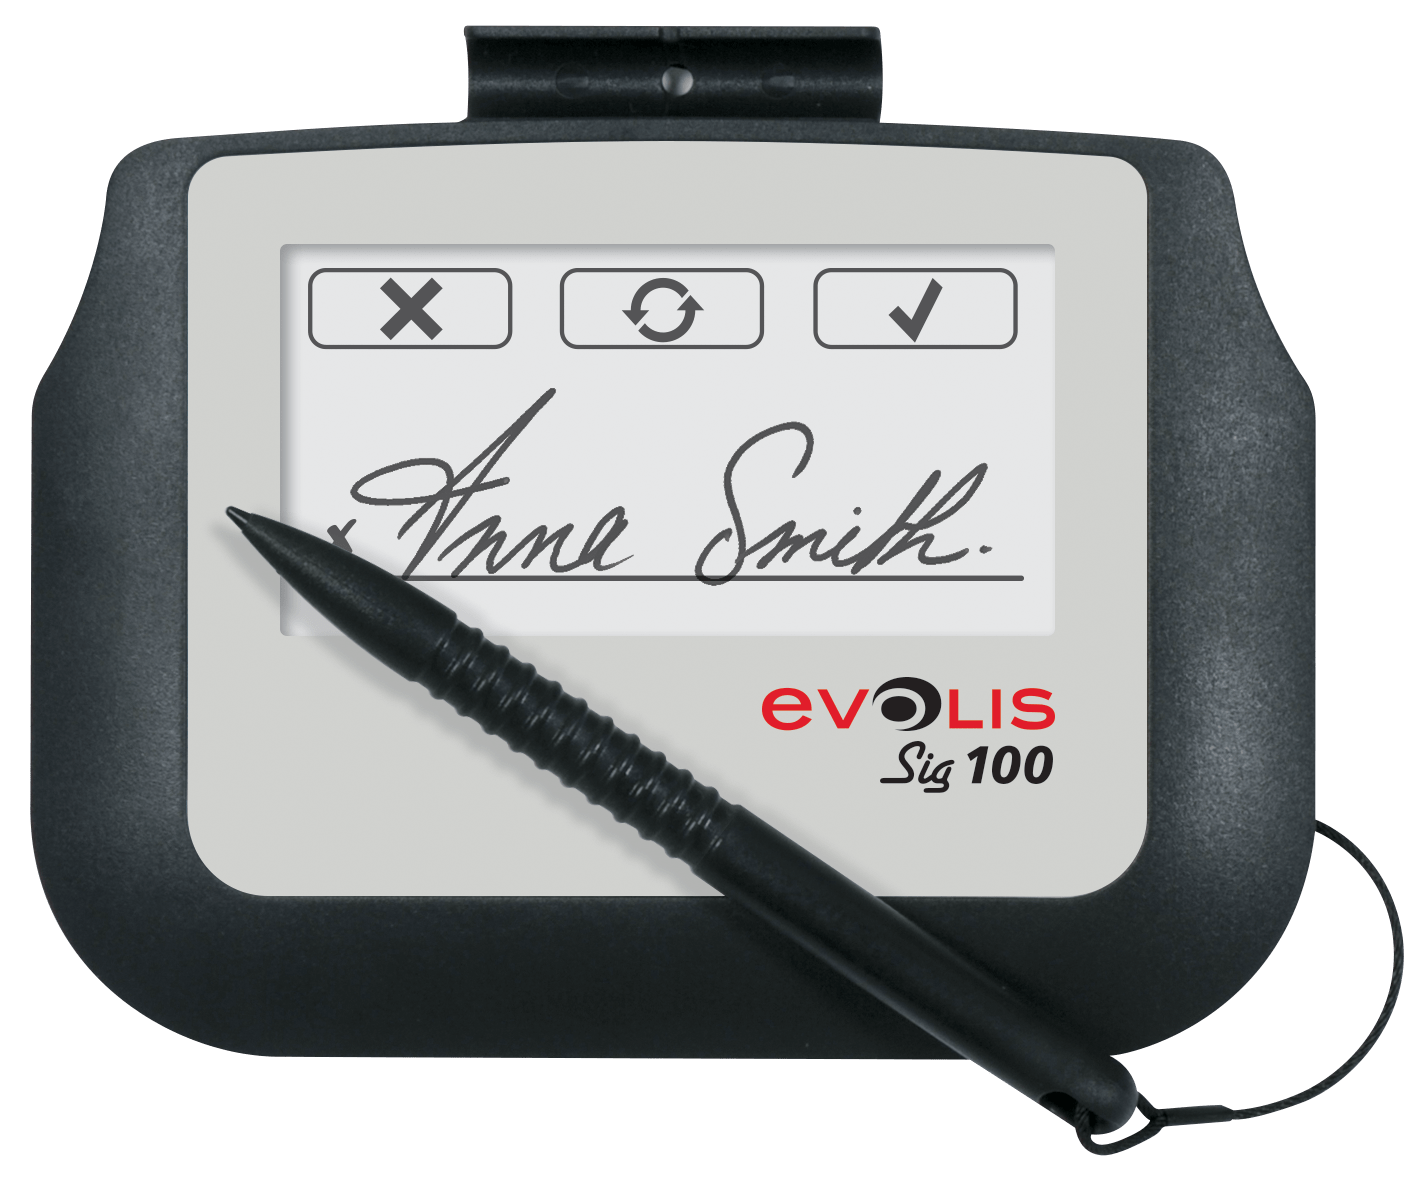 Evolis Sig 100 Monochrome Signature Pad